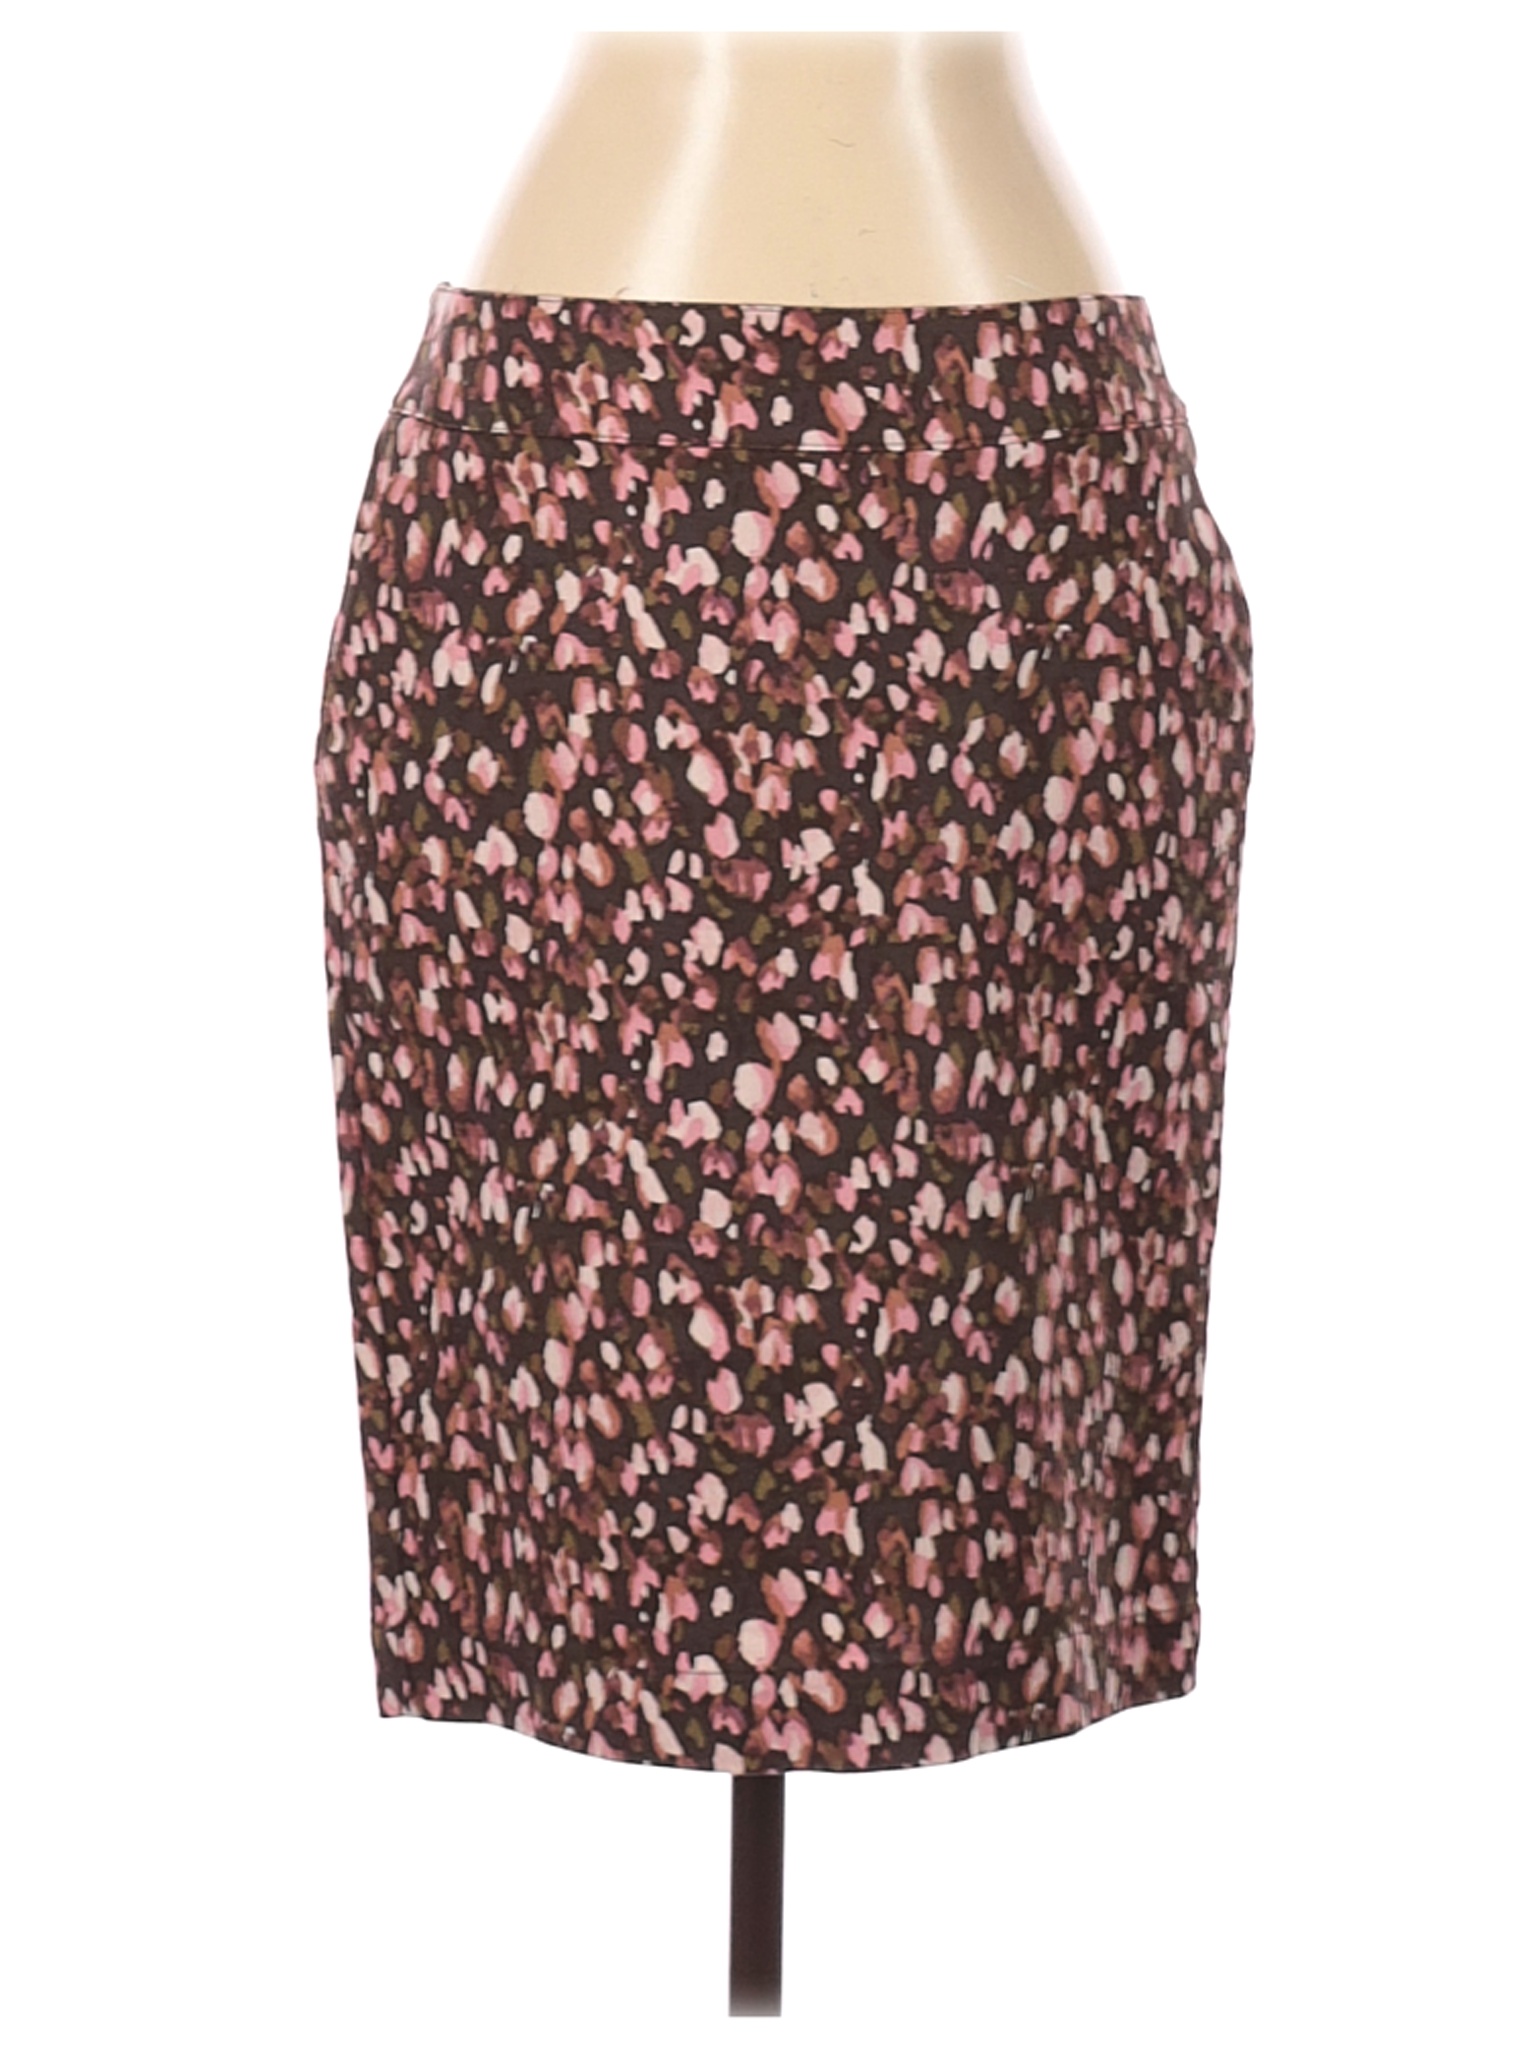 Merona Women Brown Casual Skirt 4 | eBay